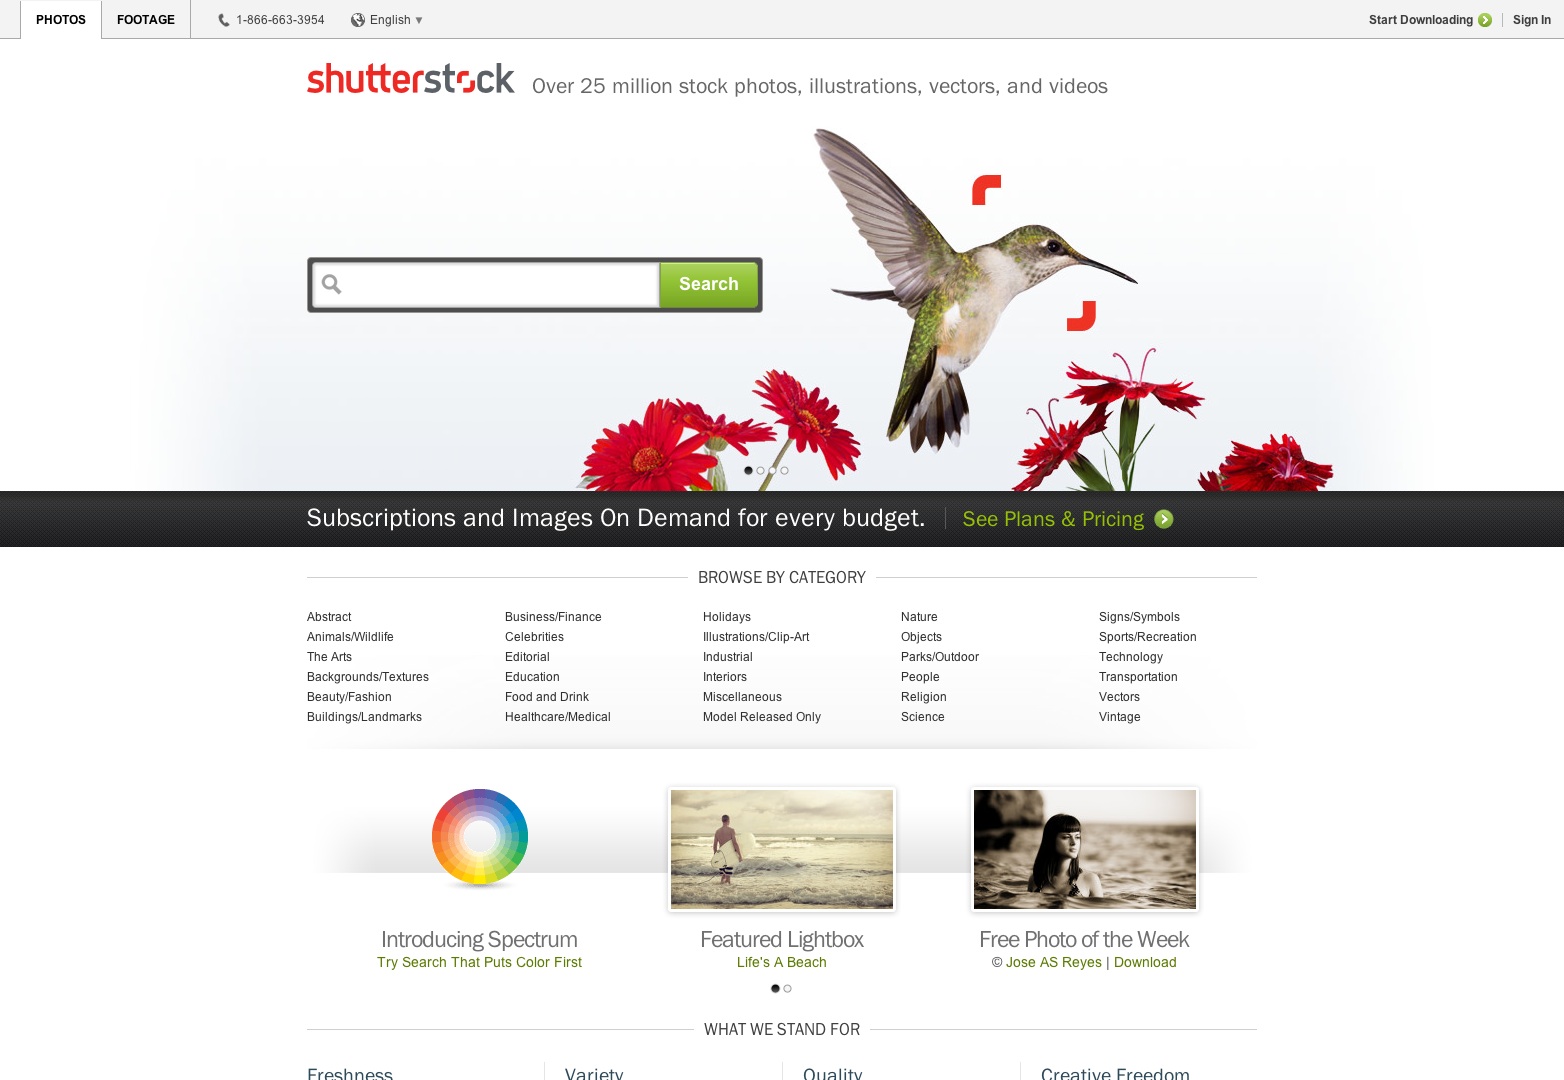 Shutterstock Royalty Free